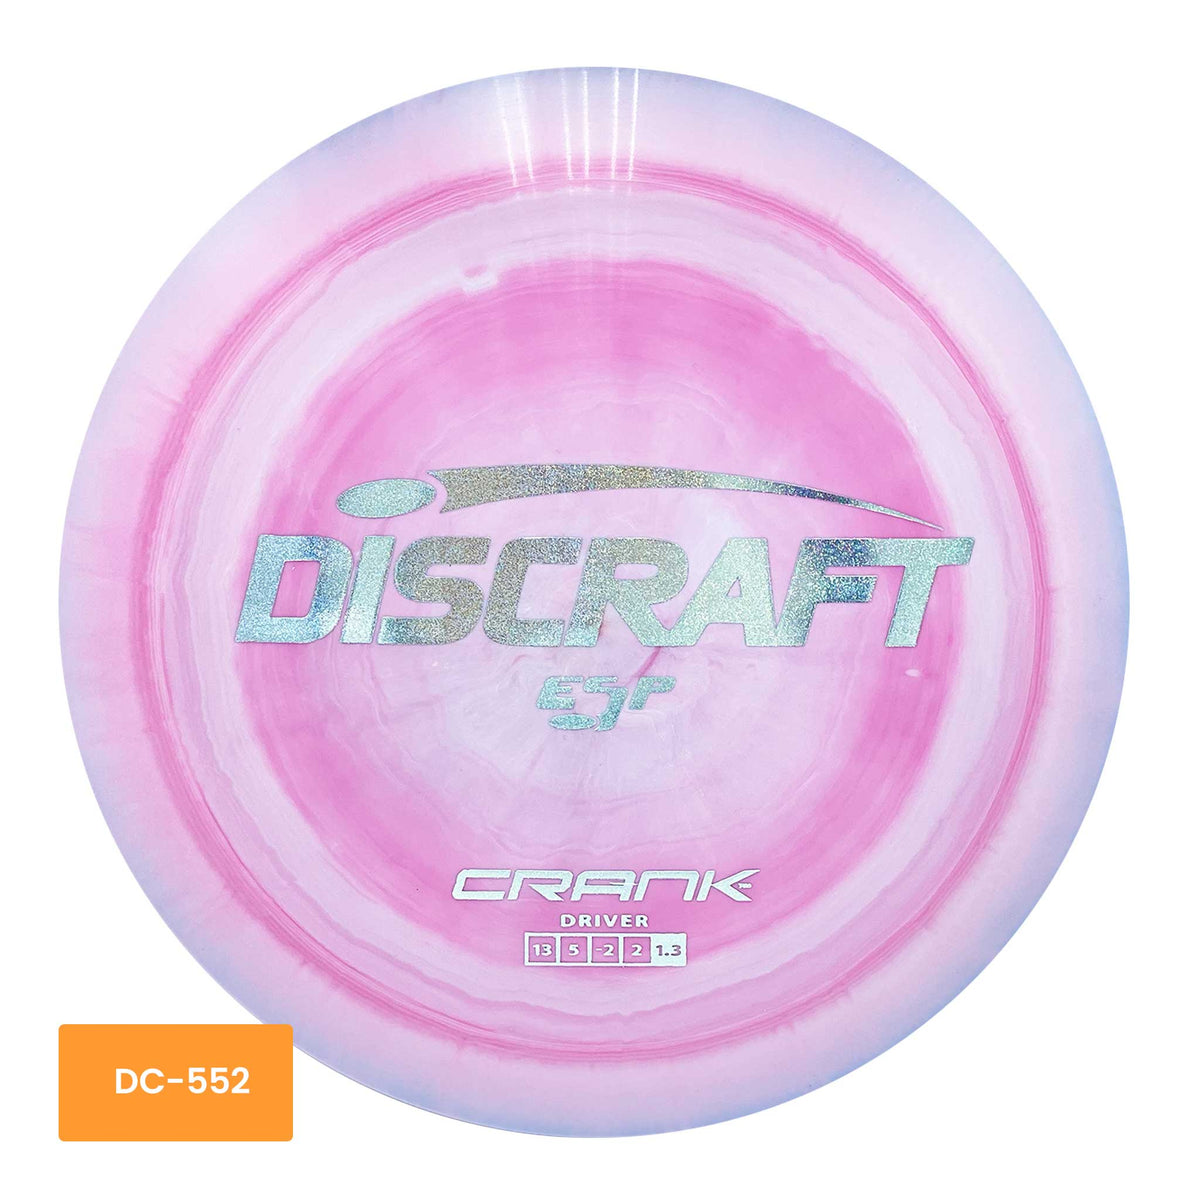 Discraft ESP Crank distance driver - Pink/Silver